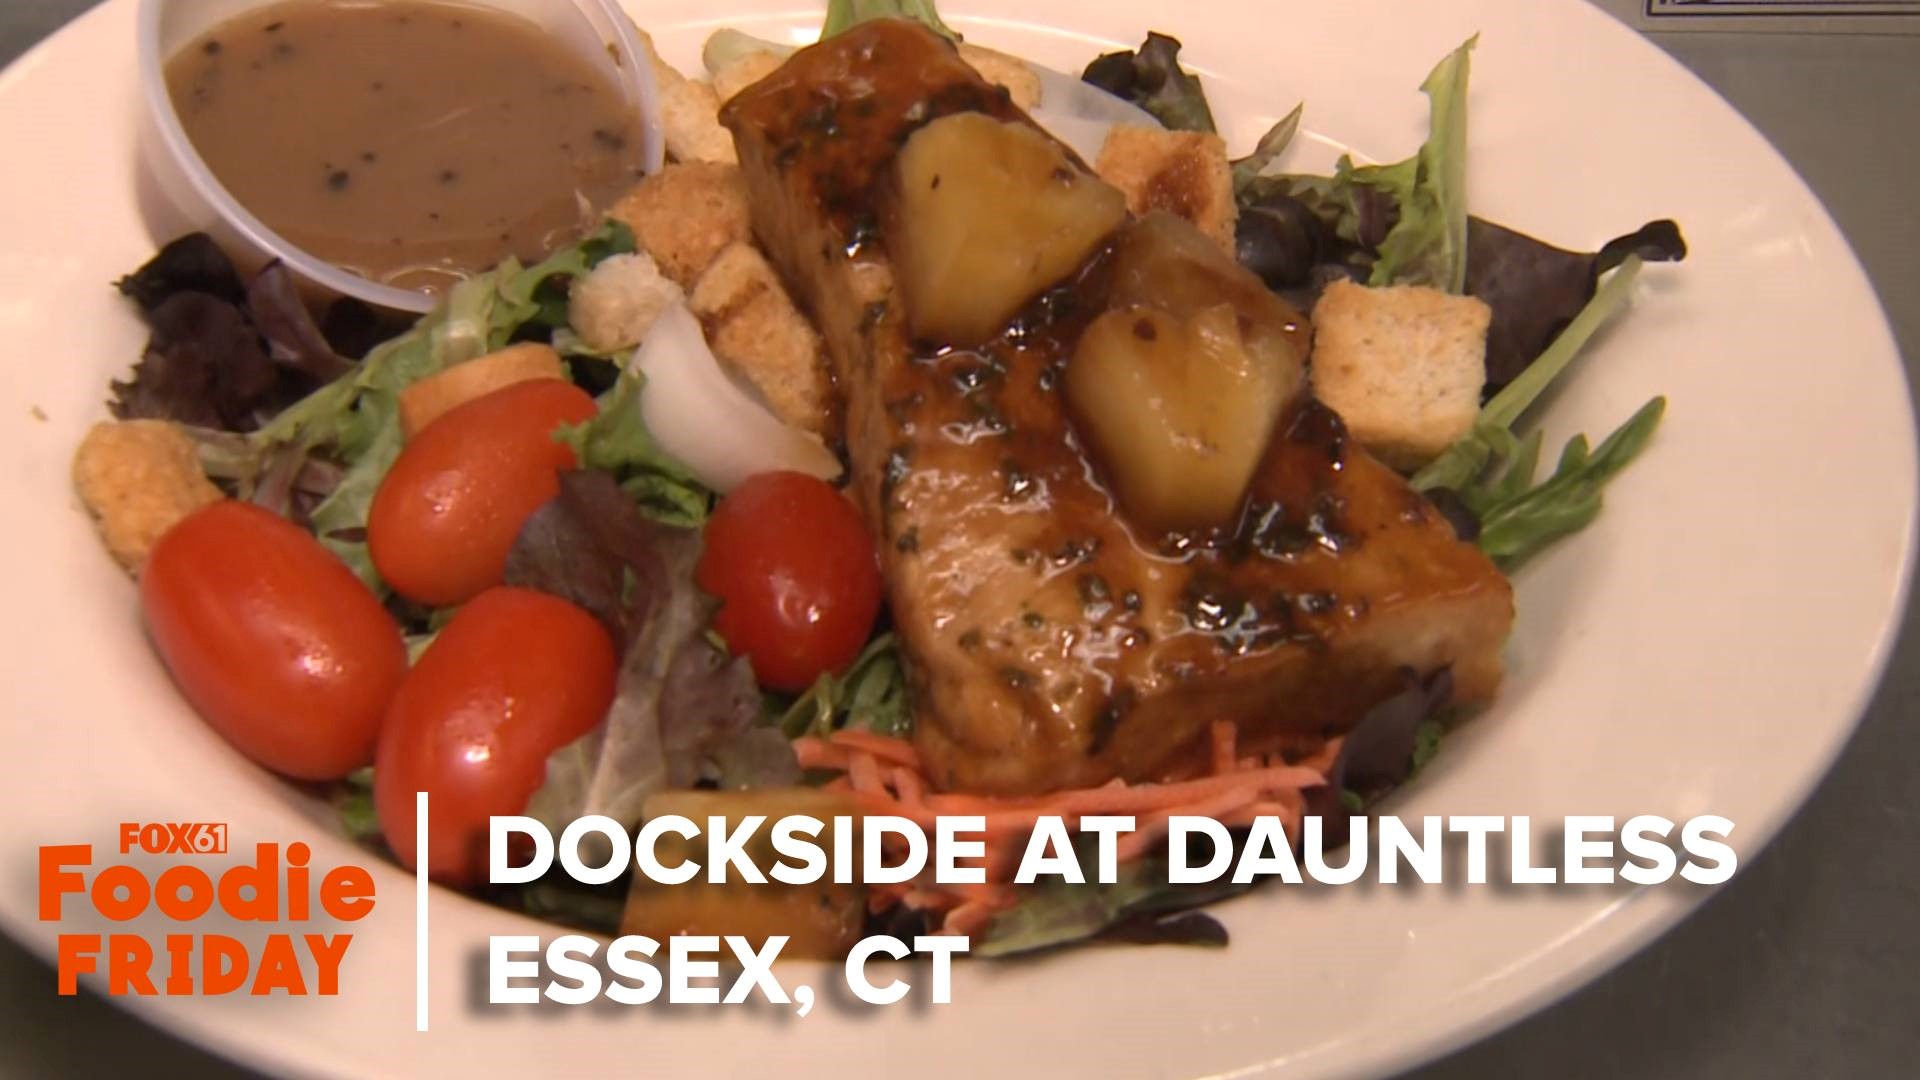 Matt Scott tries some good eats at Dockside Restaurant for Foodie Friday.